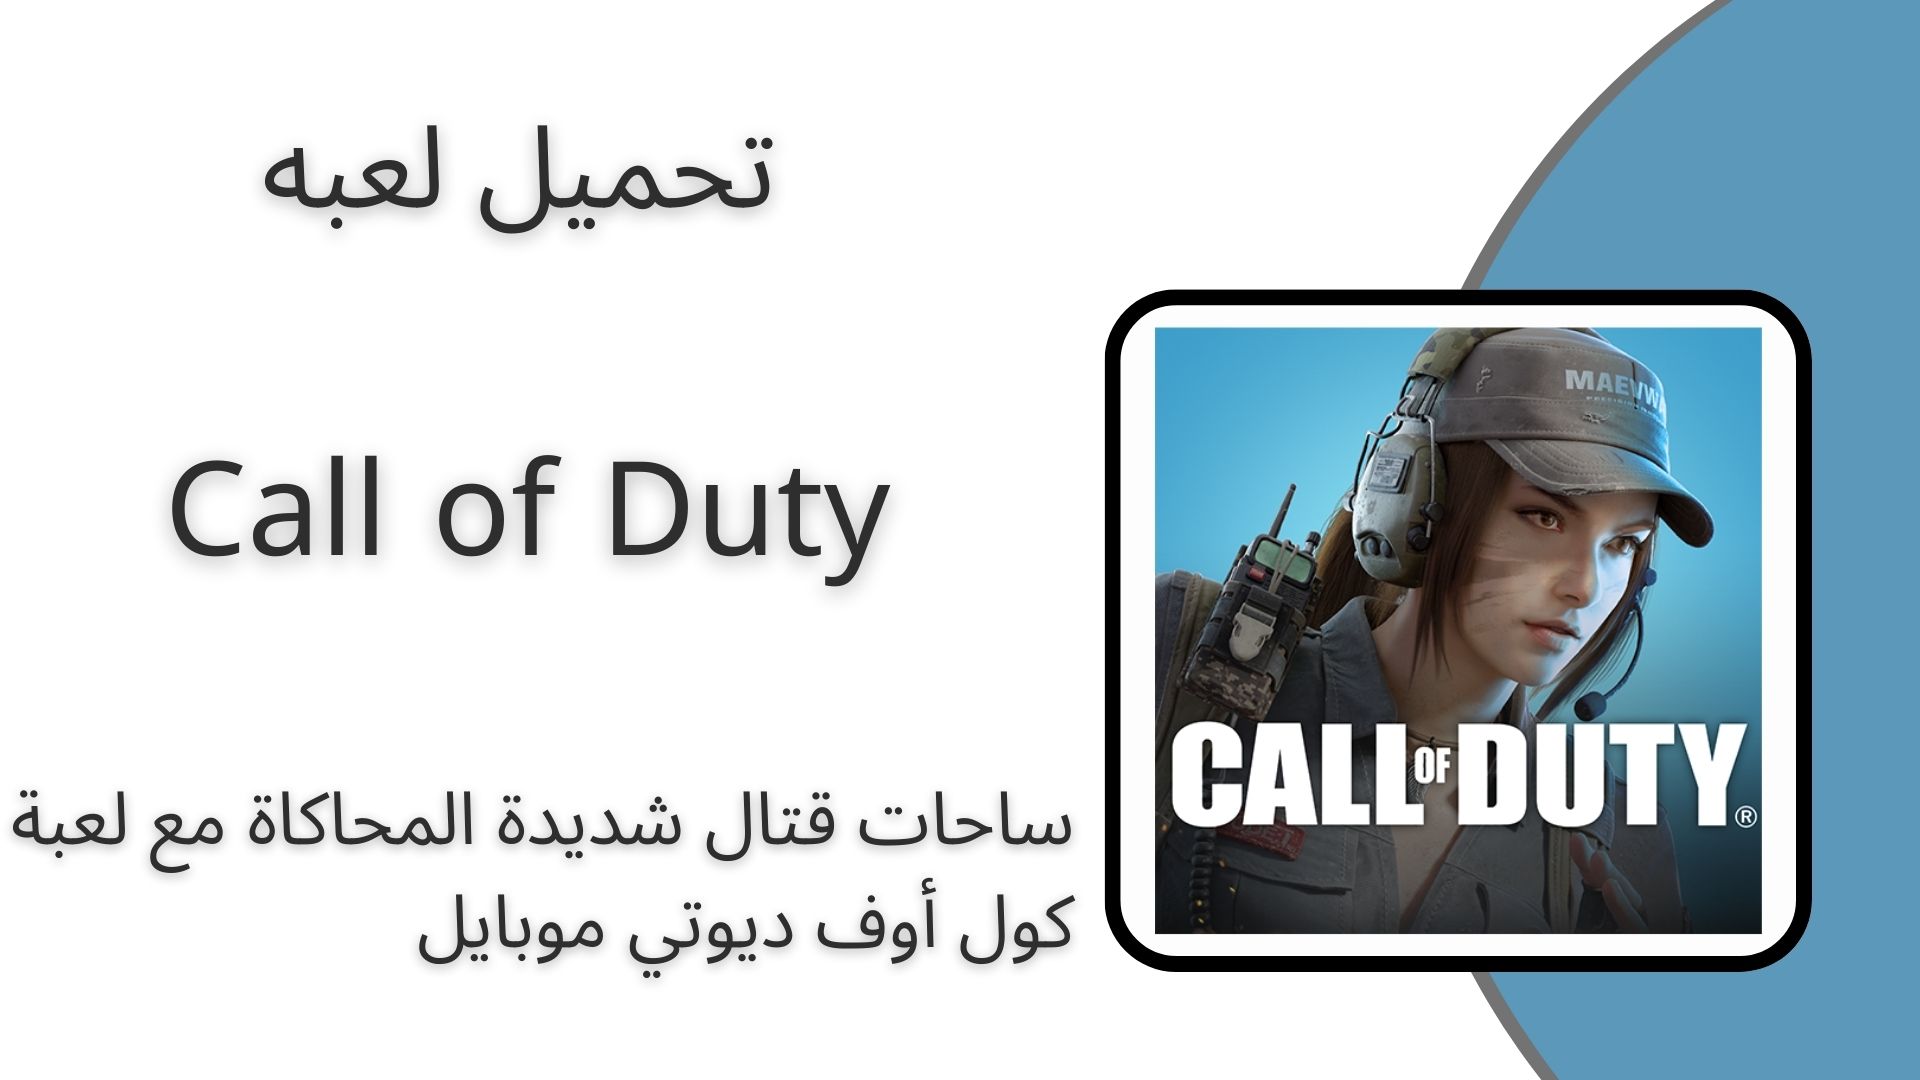 تحميل لعبة Call of Duty Mobile للاندرويد من ميديا فاير